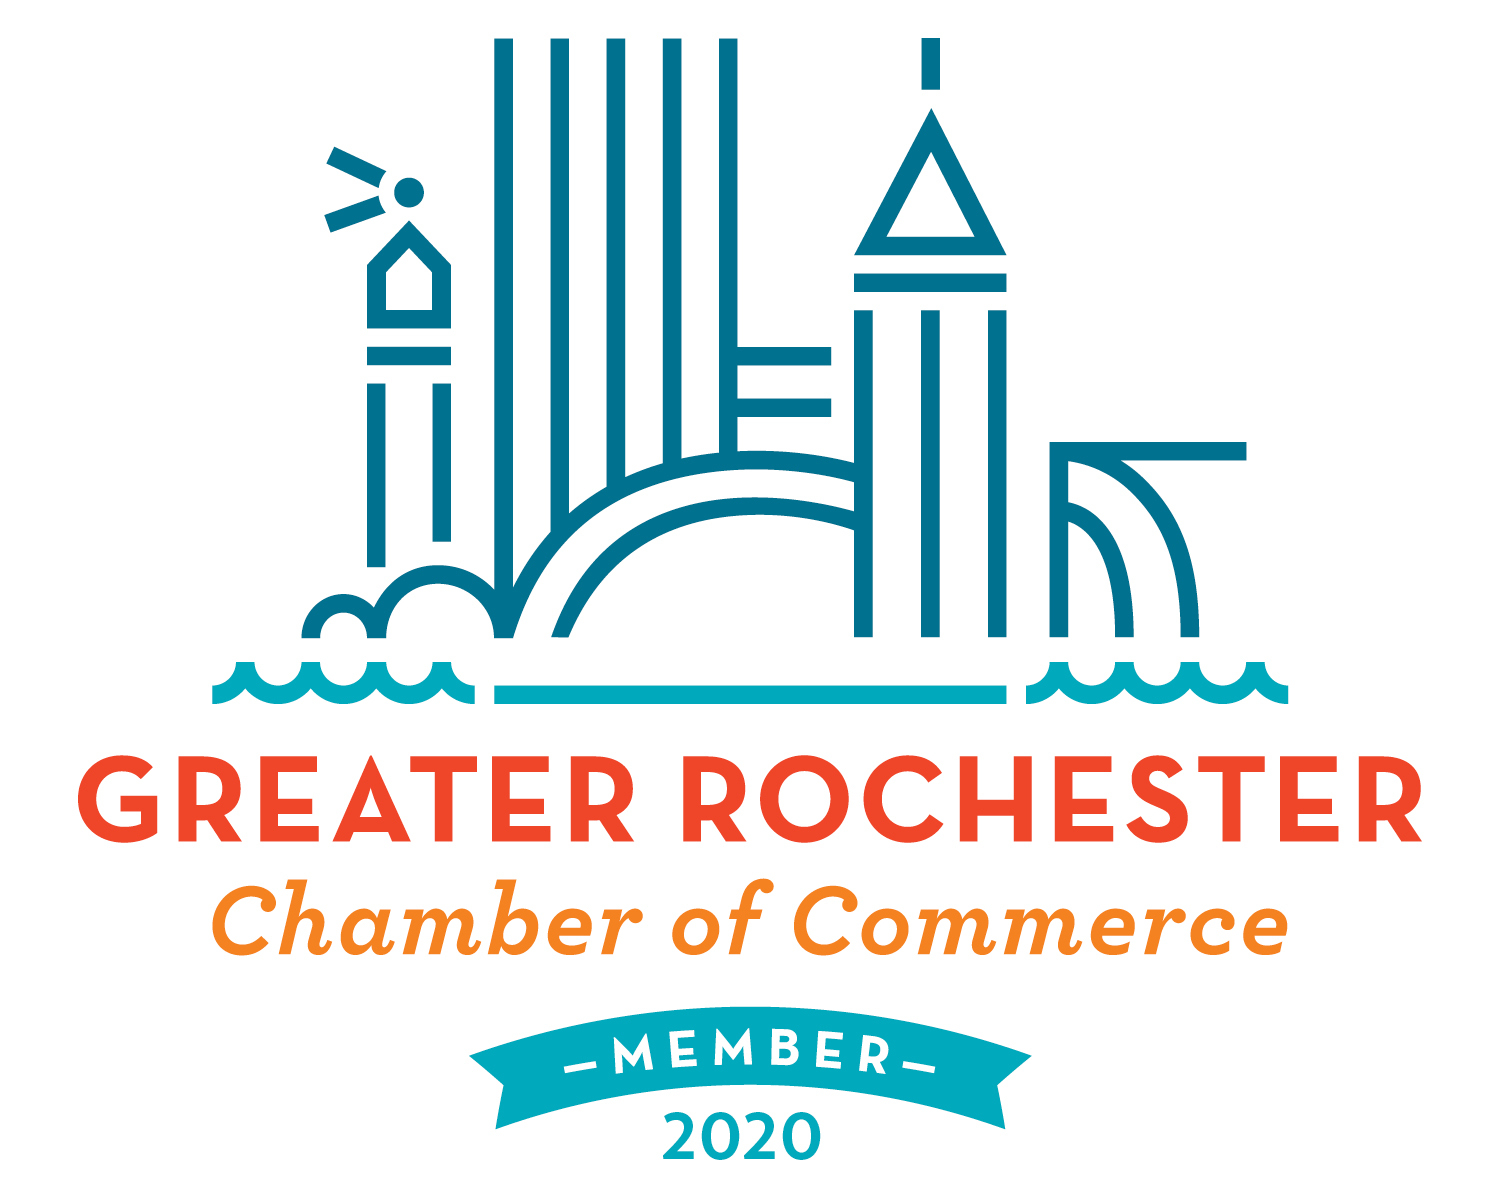 Greater Rochester Chamber of Commerce Partner Member Company